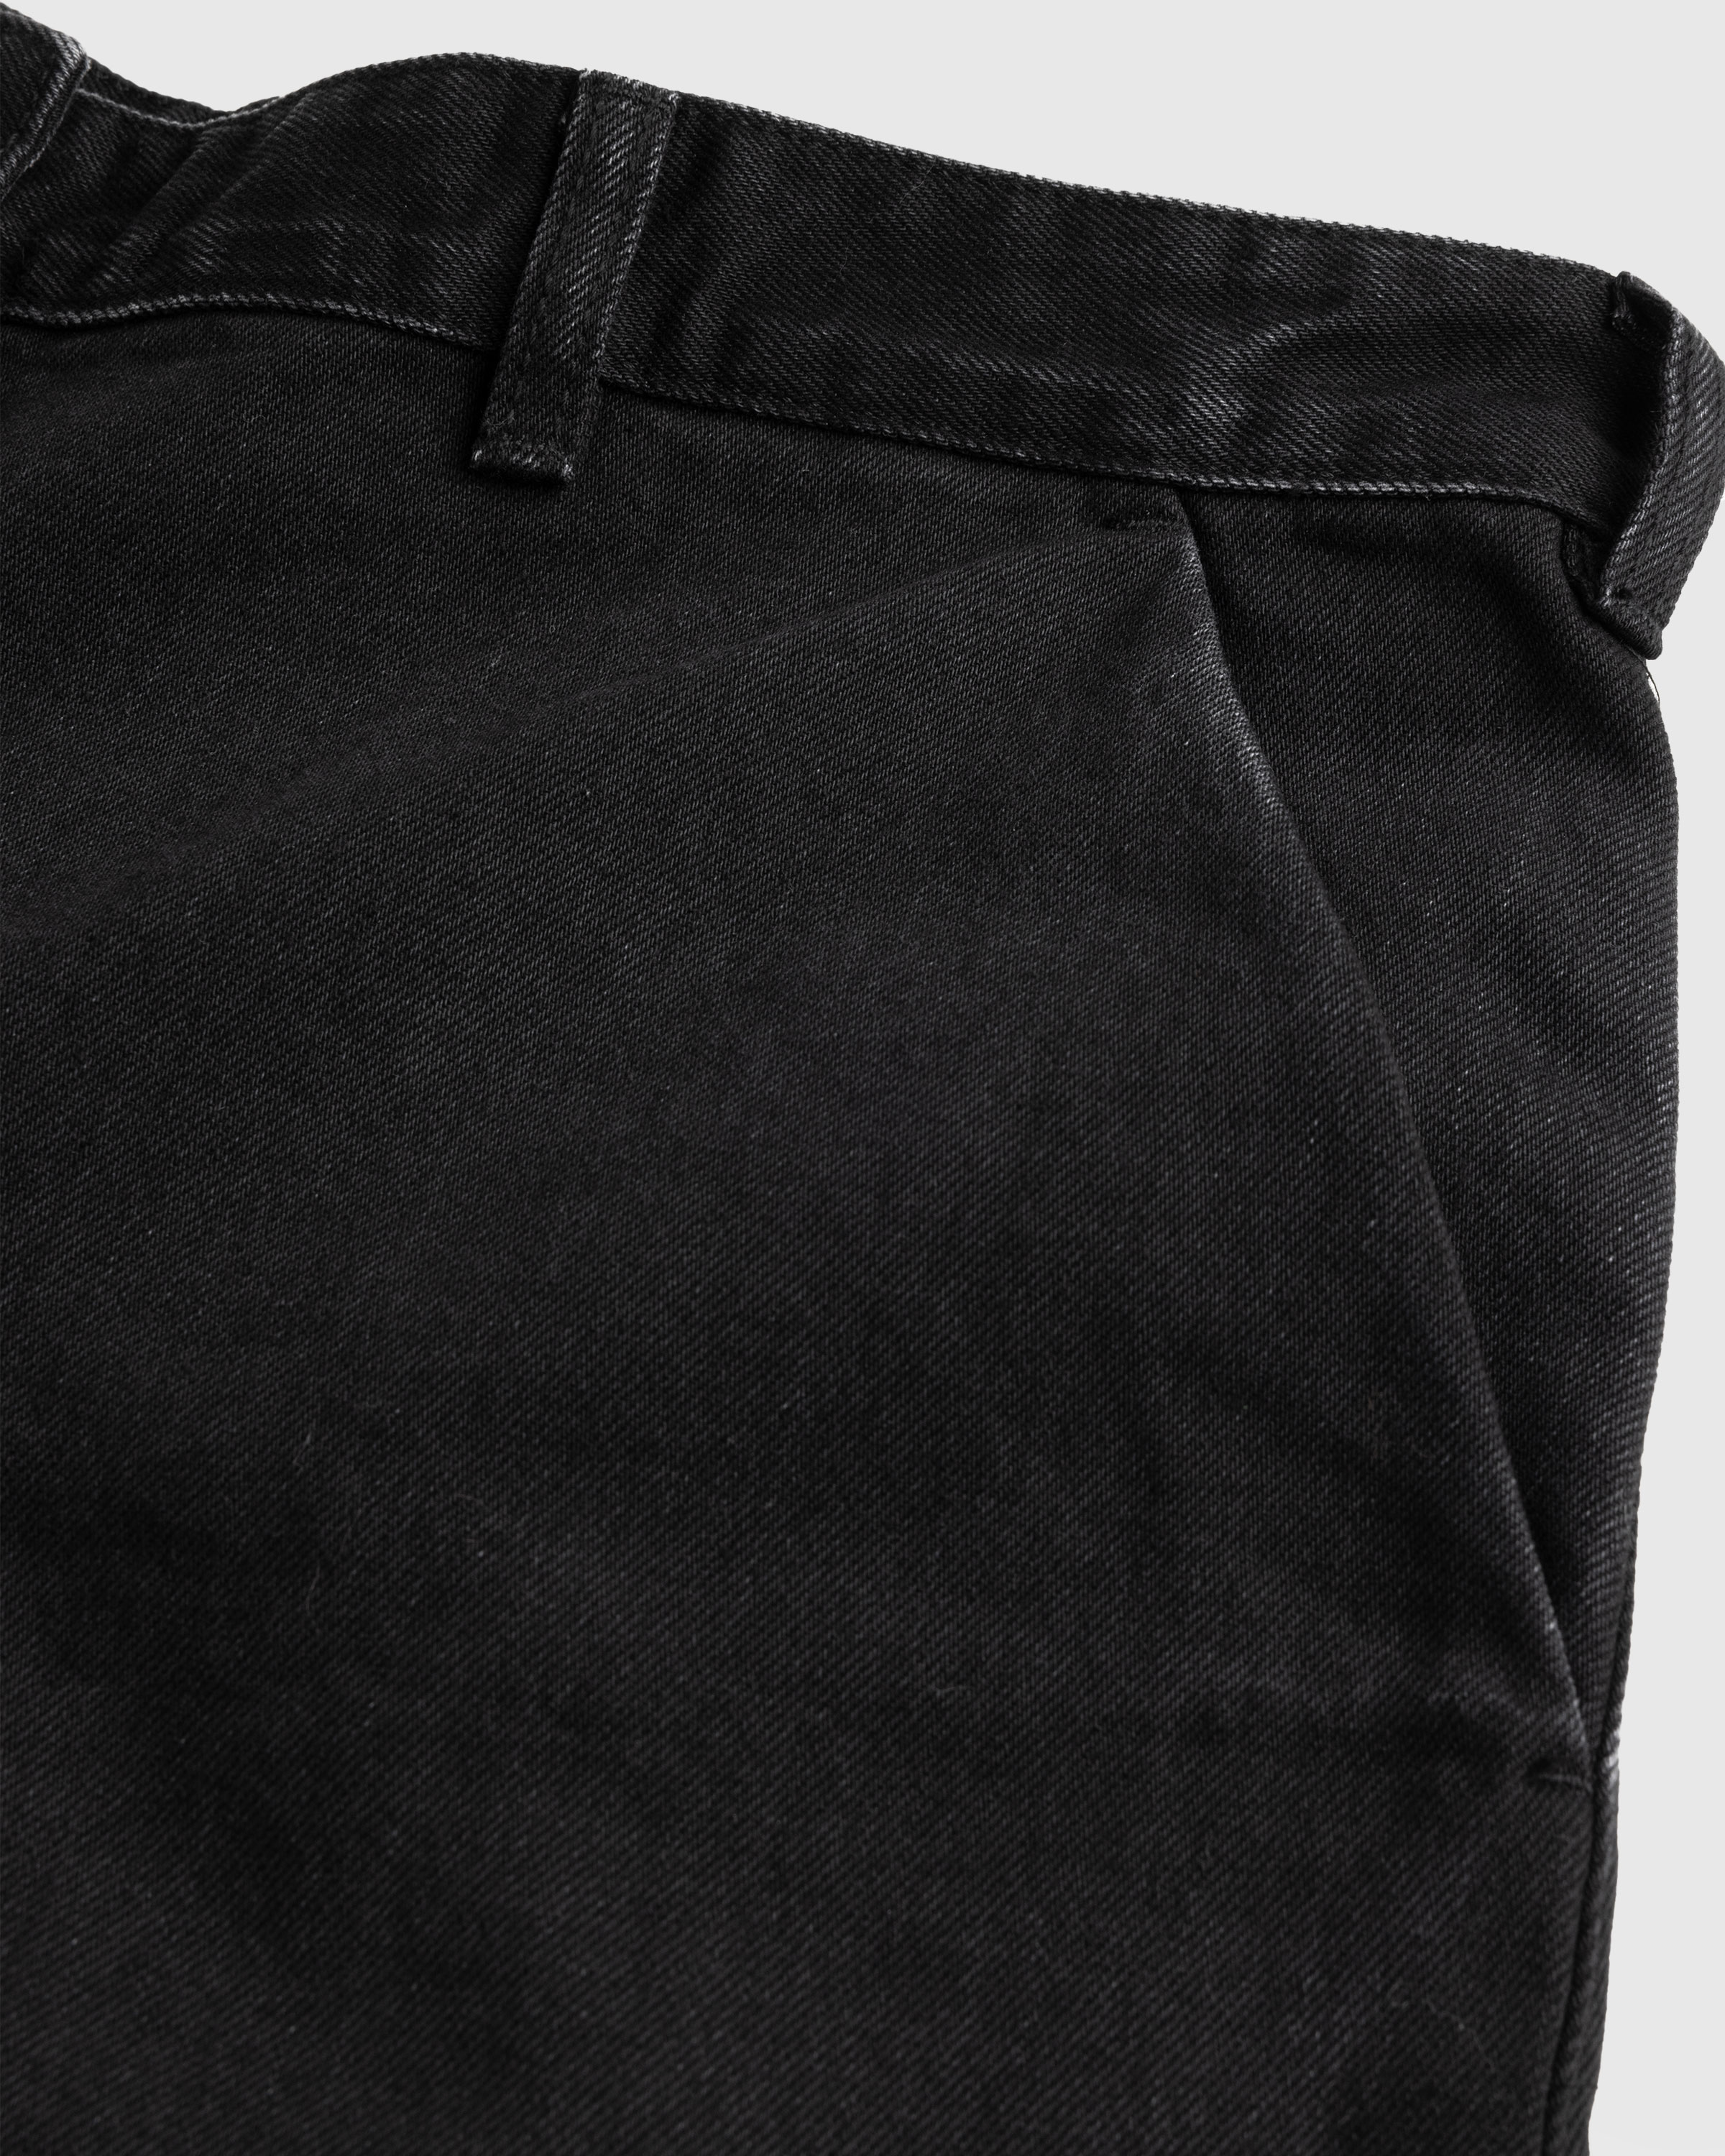 Entire Studios – Dem Jeans Magnetite - Denim - Black - Image 7